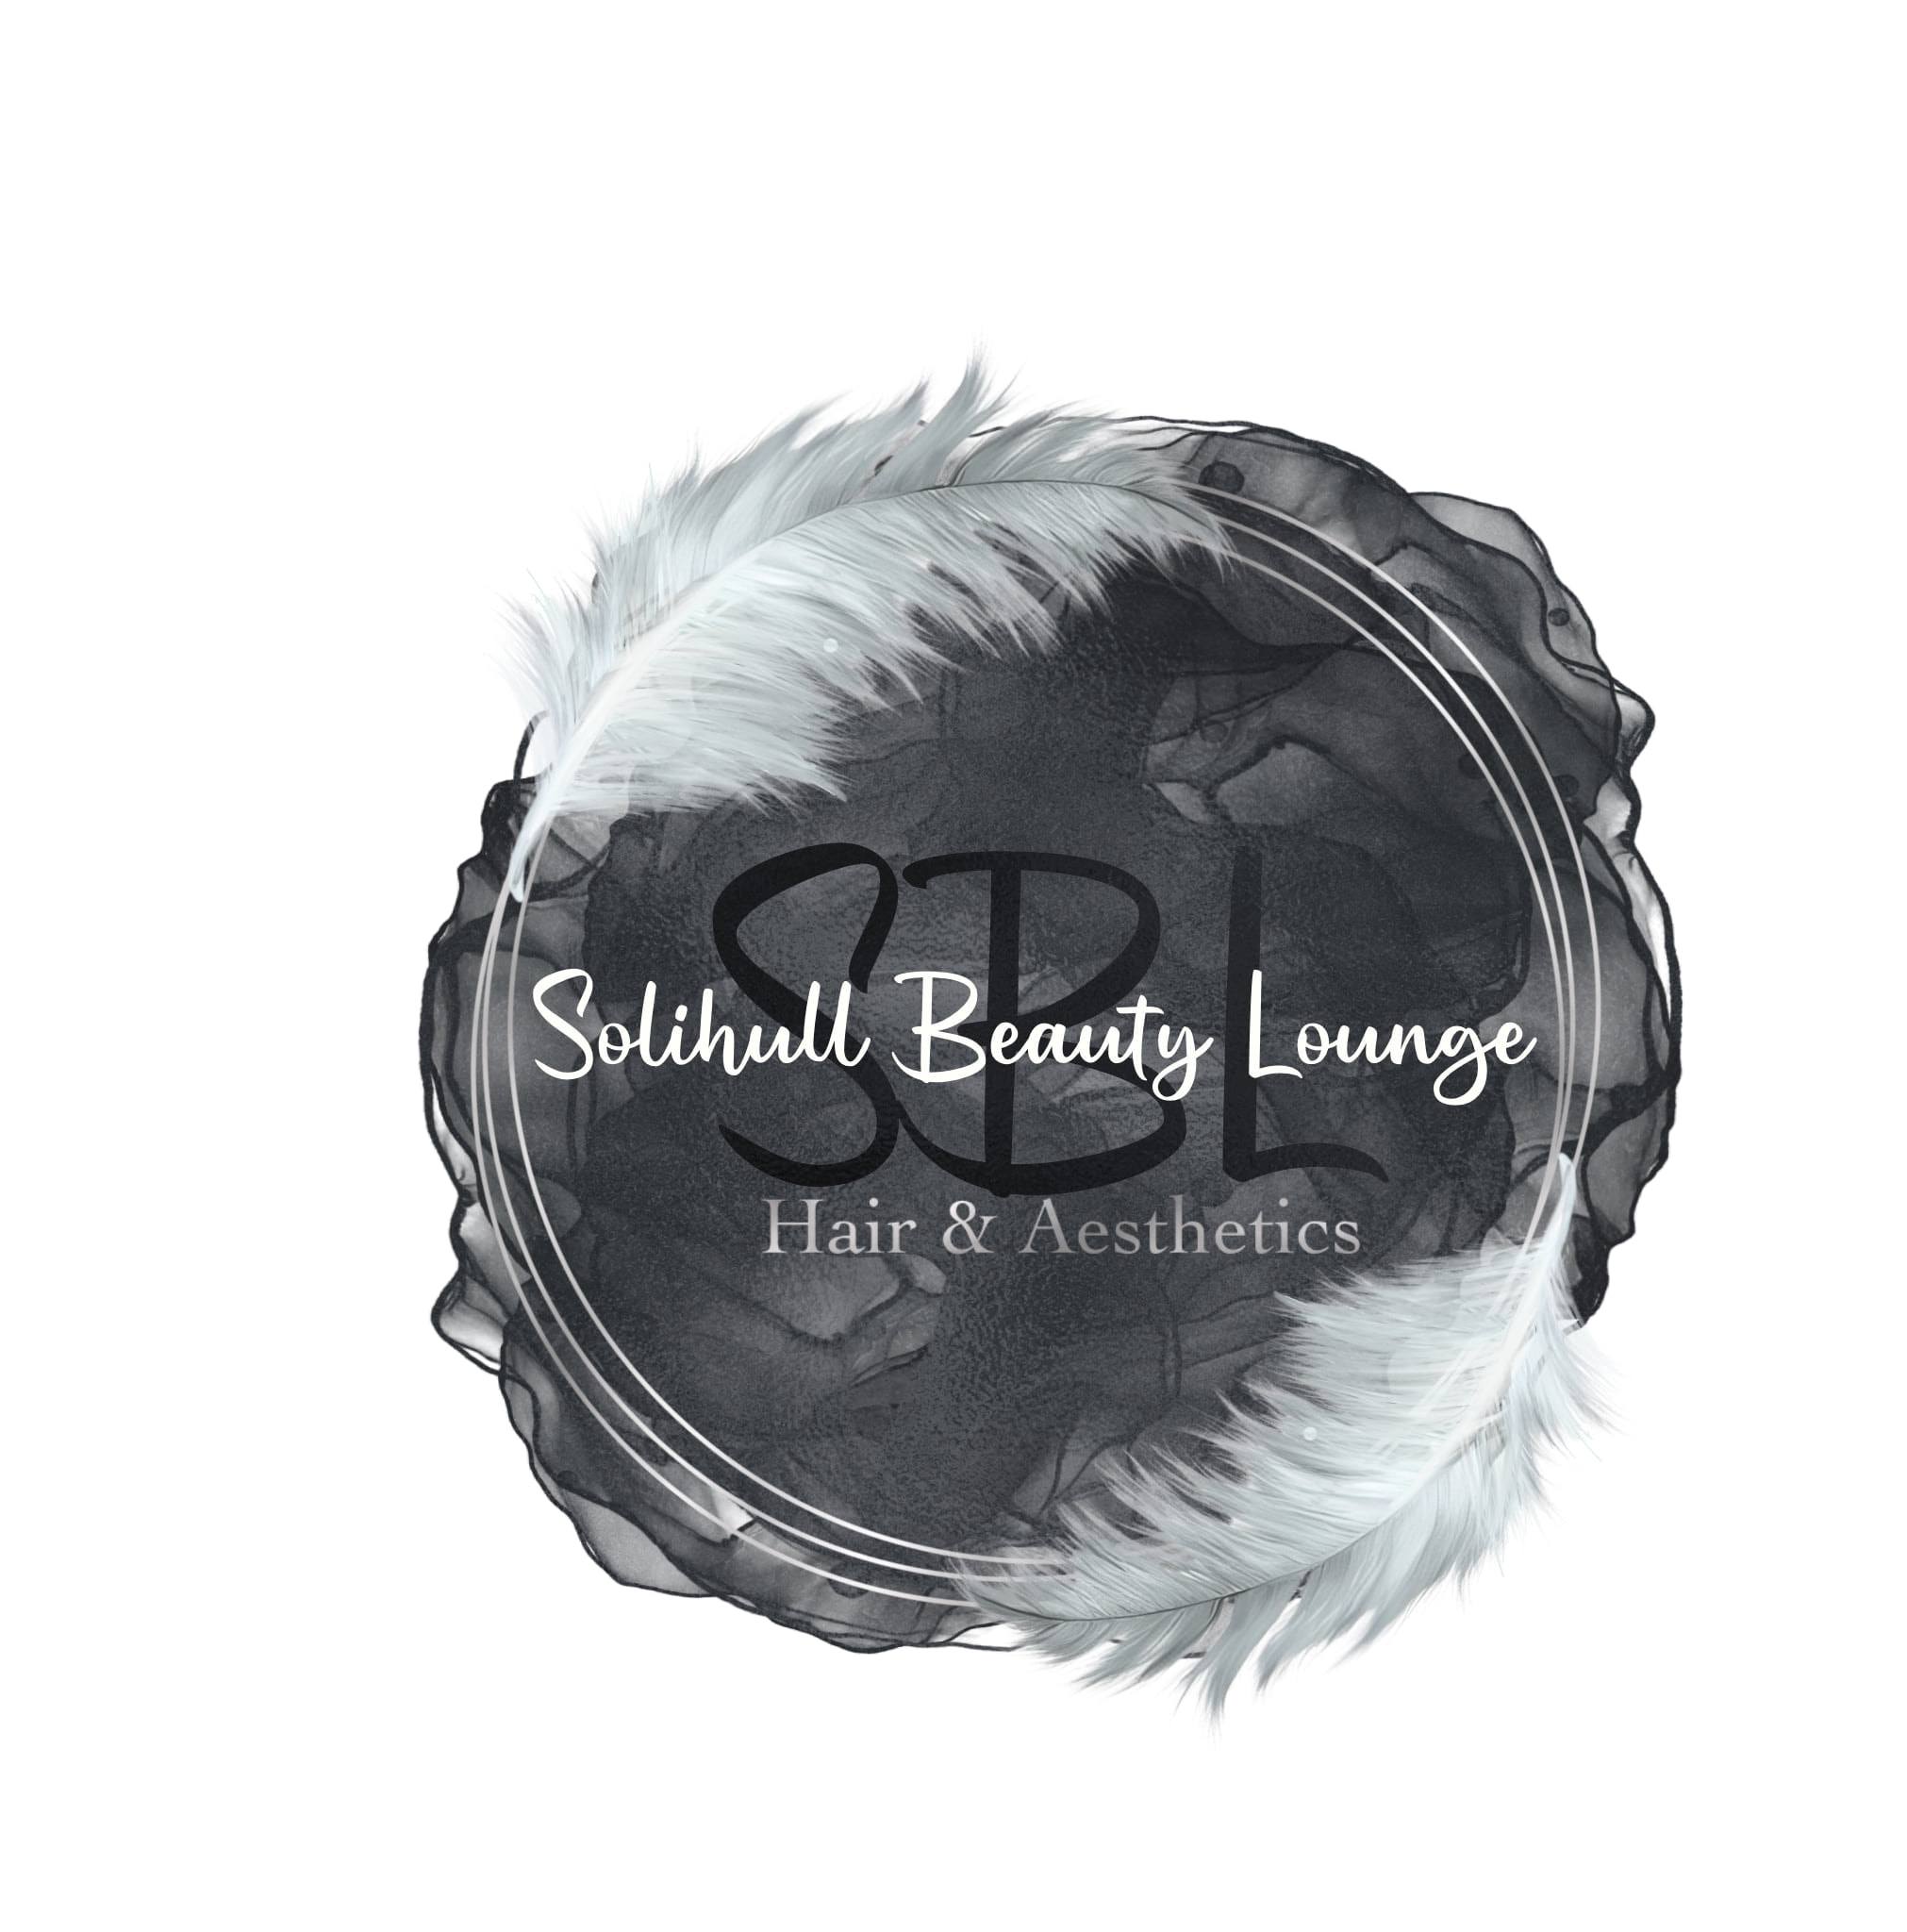 Solihull Beauty Lounge